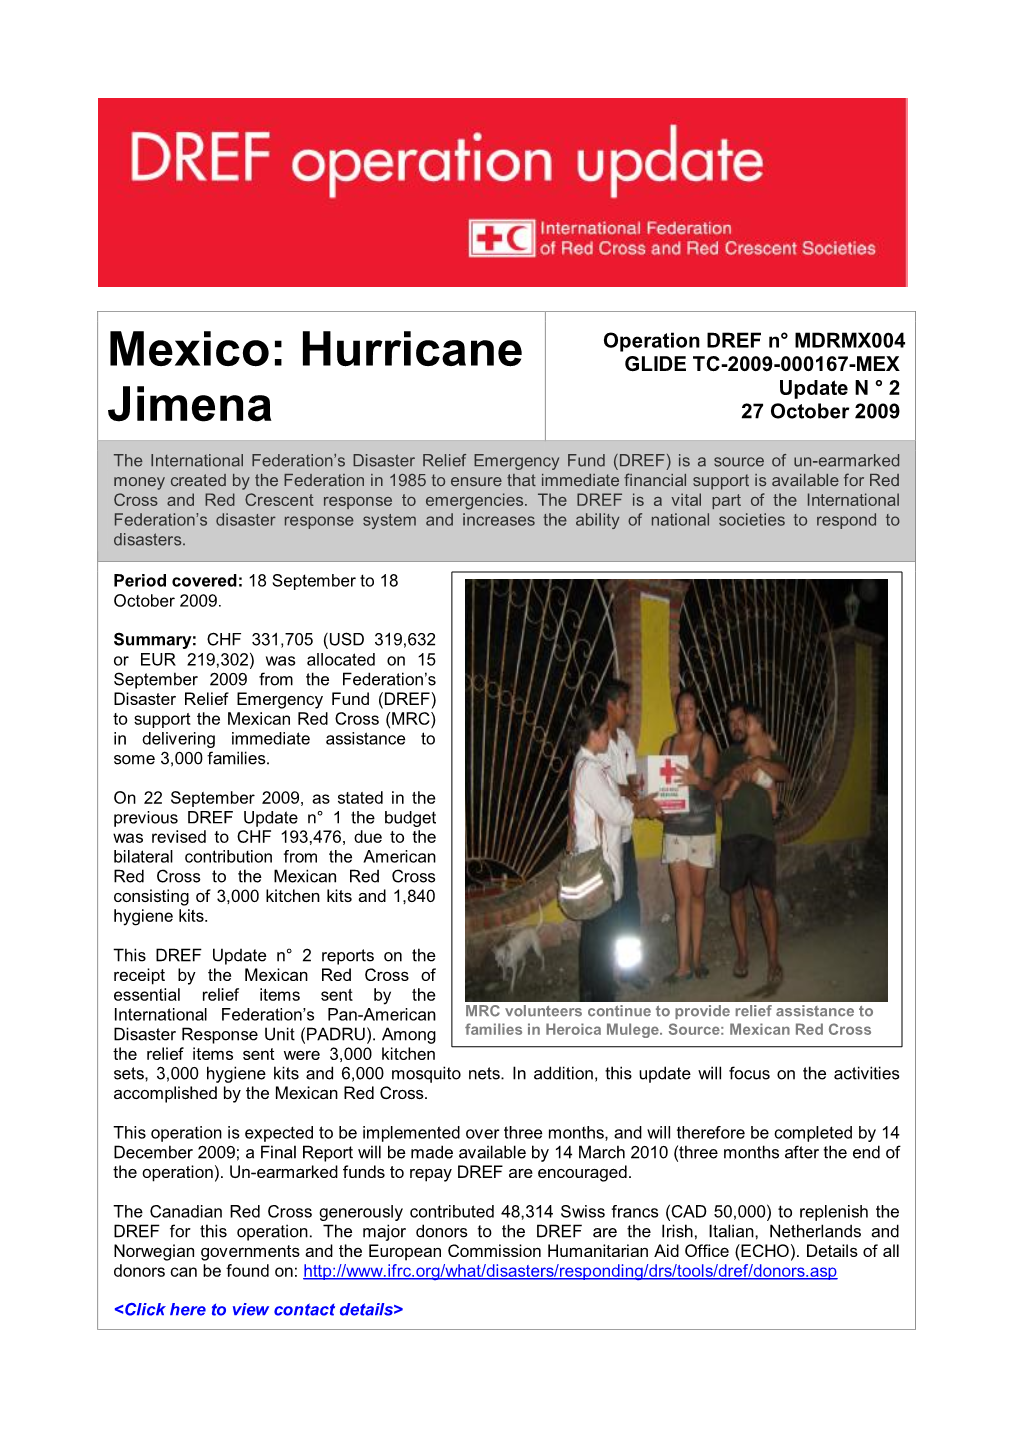 Mexico: Hurricane Jimena